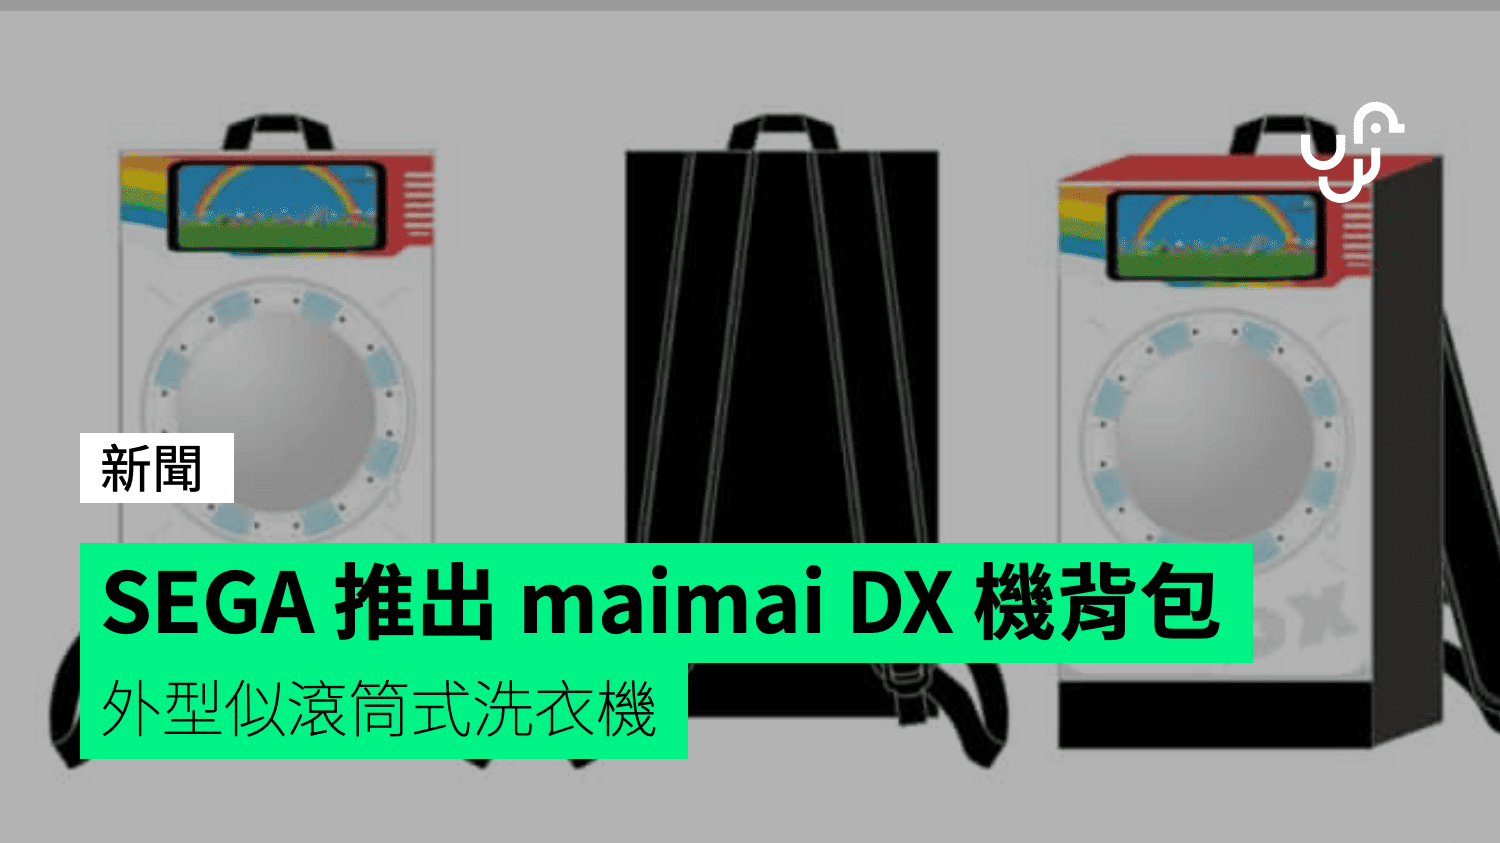 SEGA 推出maimai DX 機背包外型似滾筒式洗衣機- unwire.hk 香港